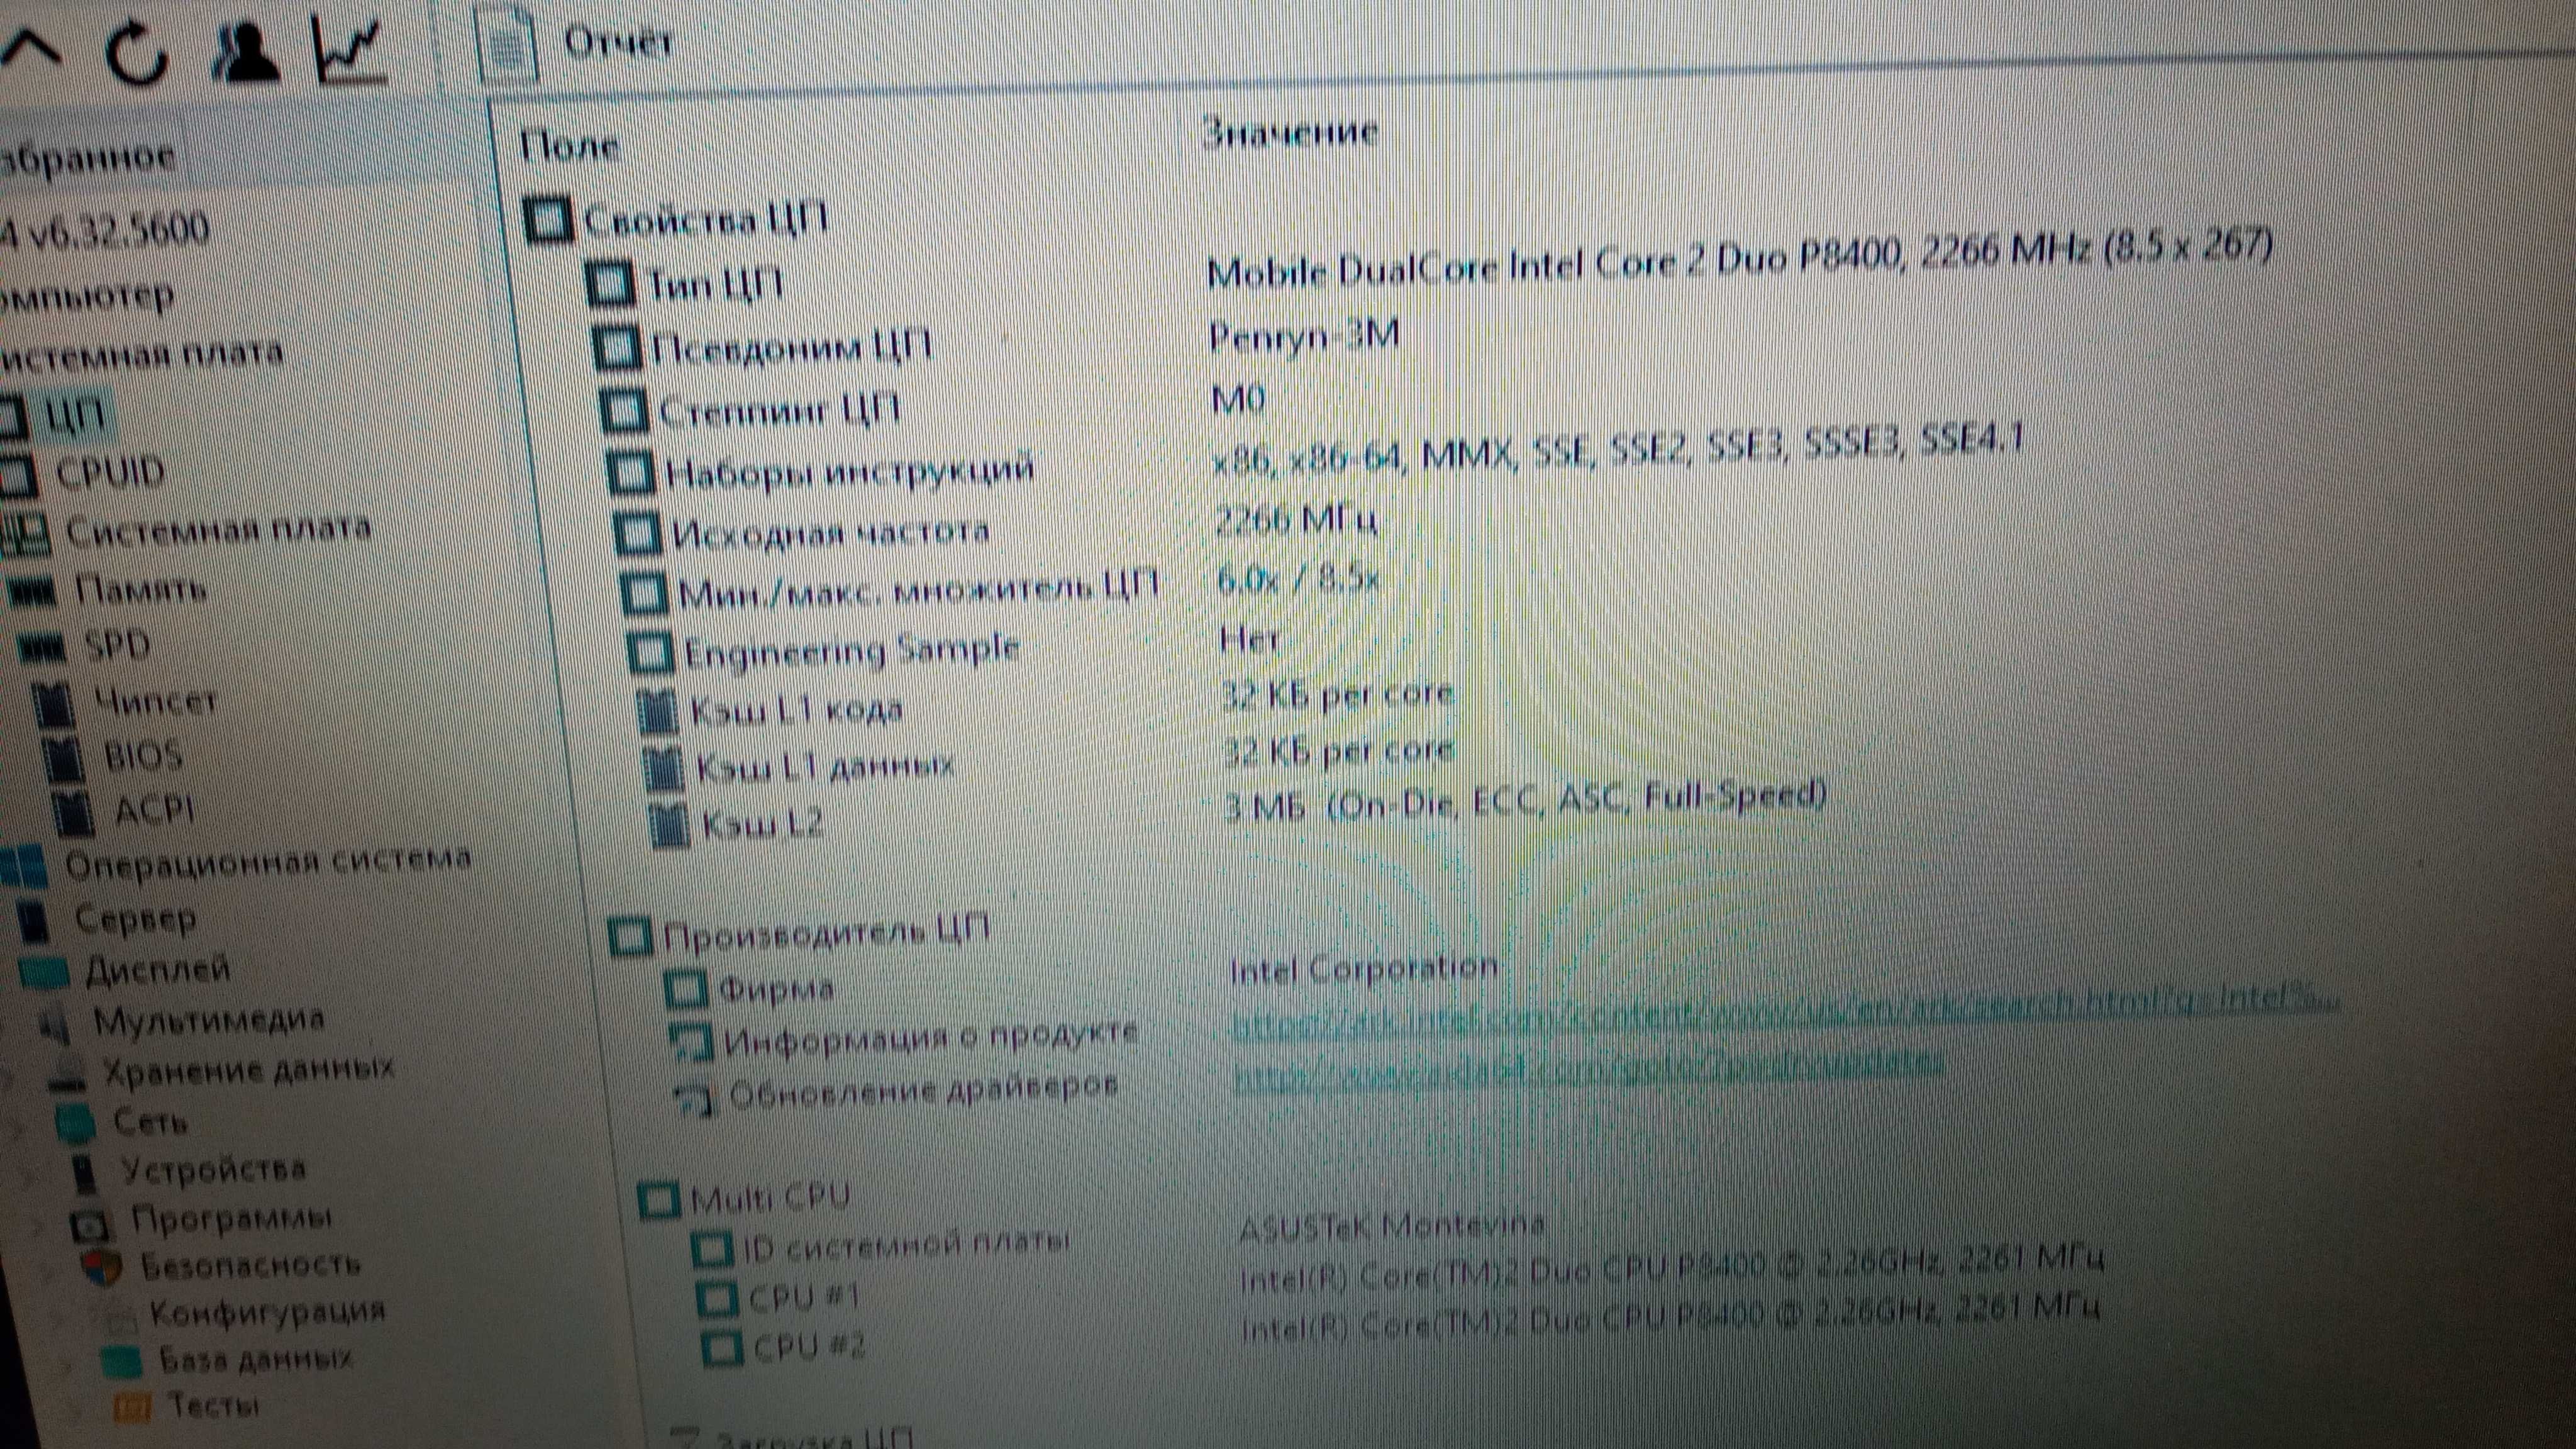 Ноутбук ASUS M50VC  +3GB/120GB-SSD/Core2Duo P8400 зарядное